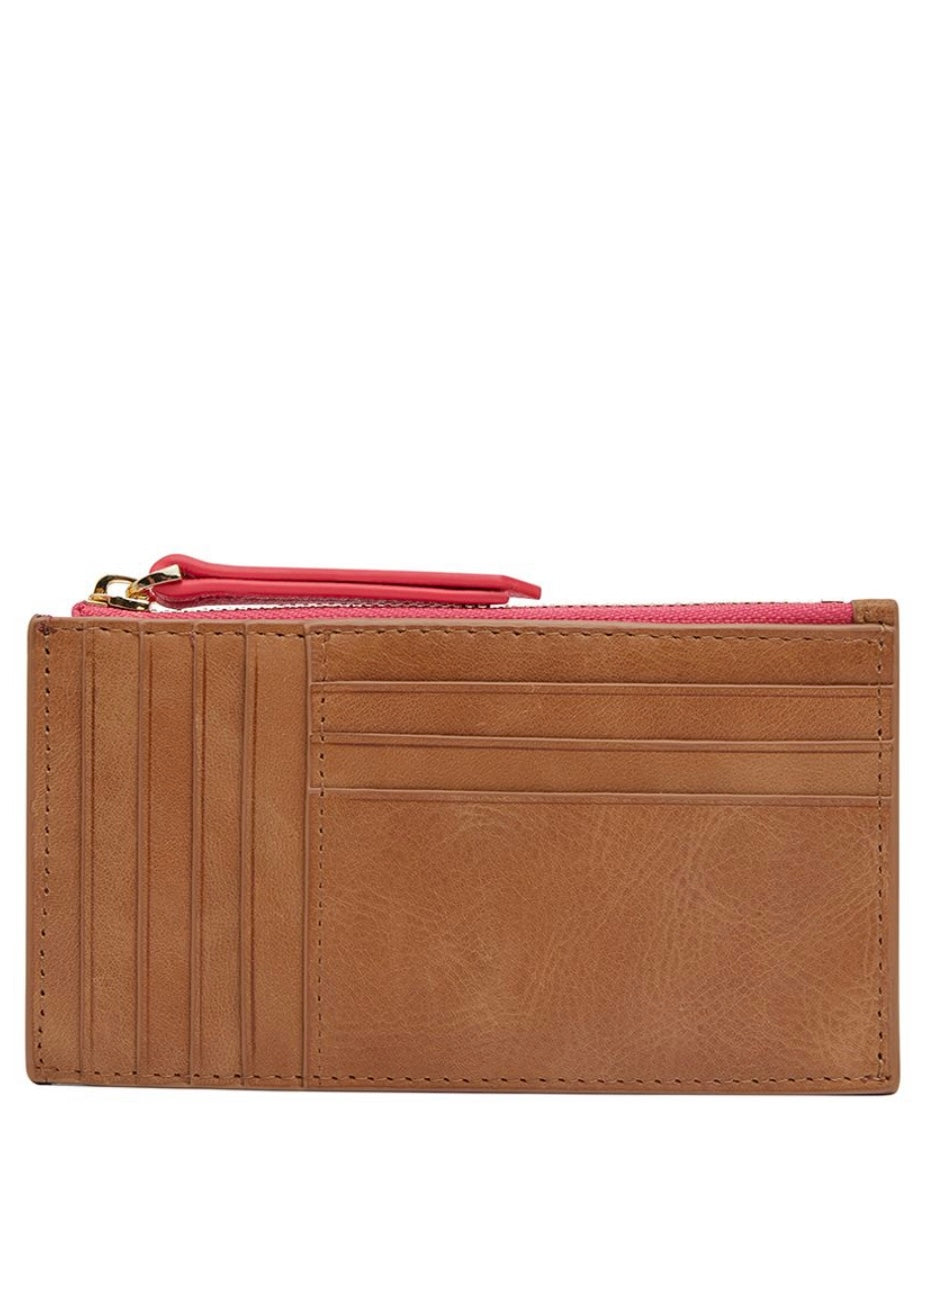 arlington milne, compact wallet, vintage tan, tan wallet, leather wallet, card wallet